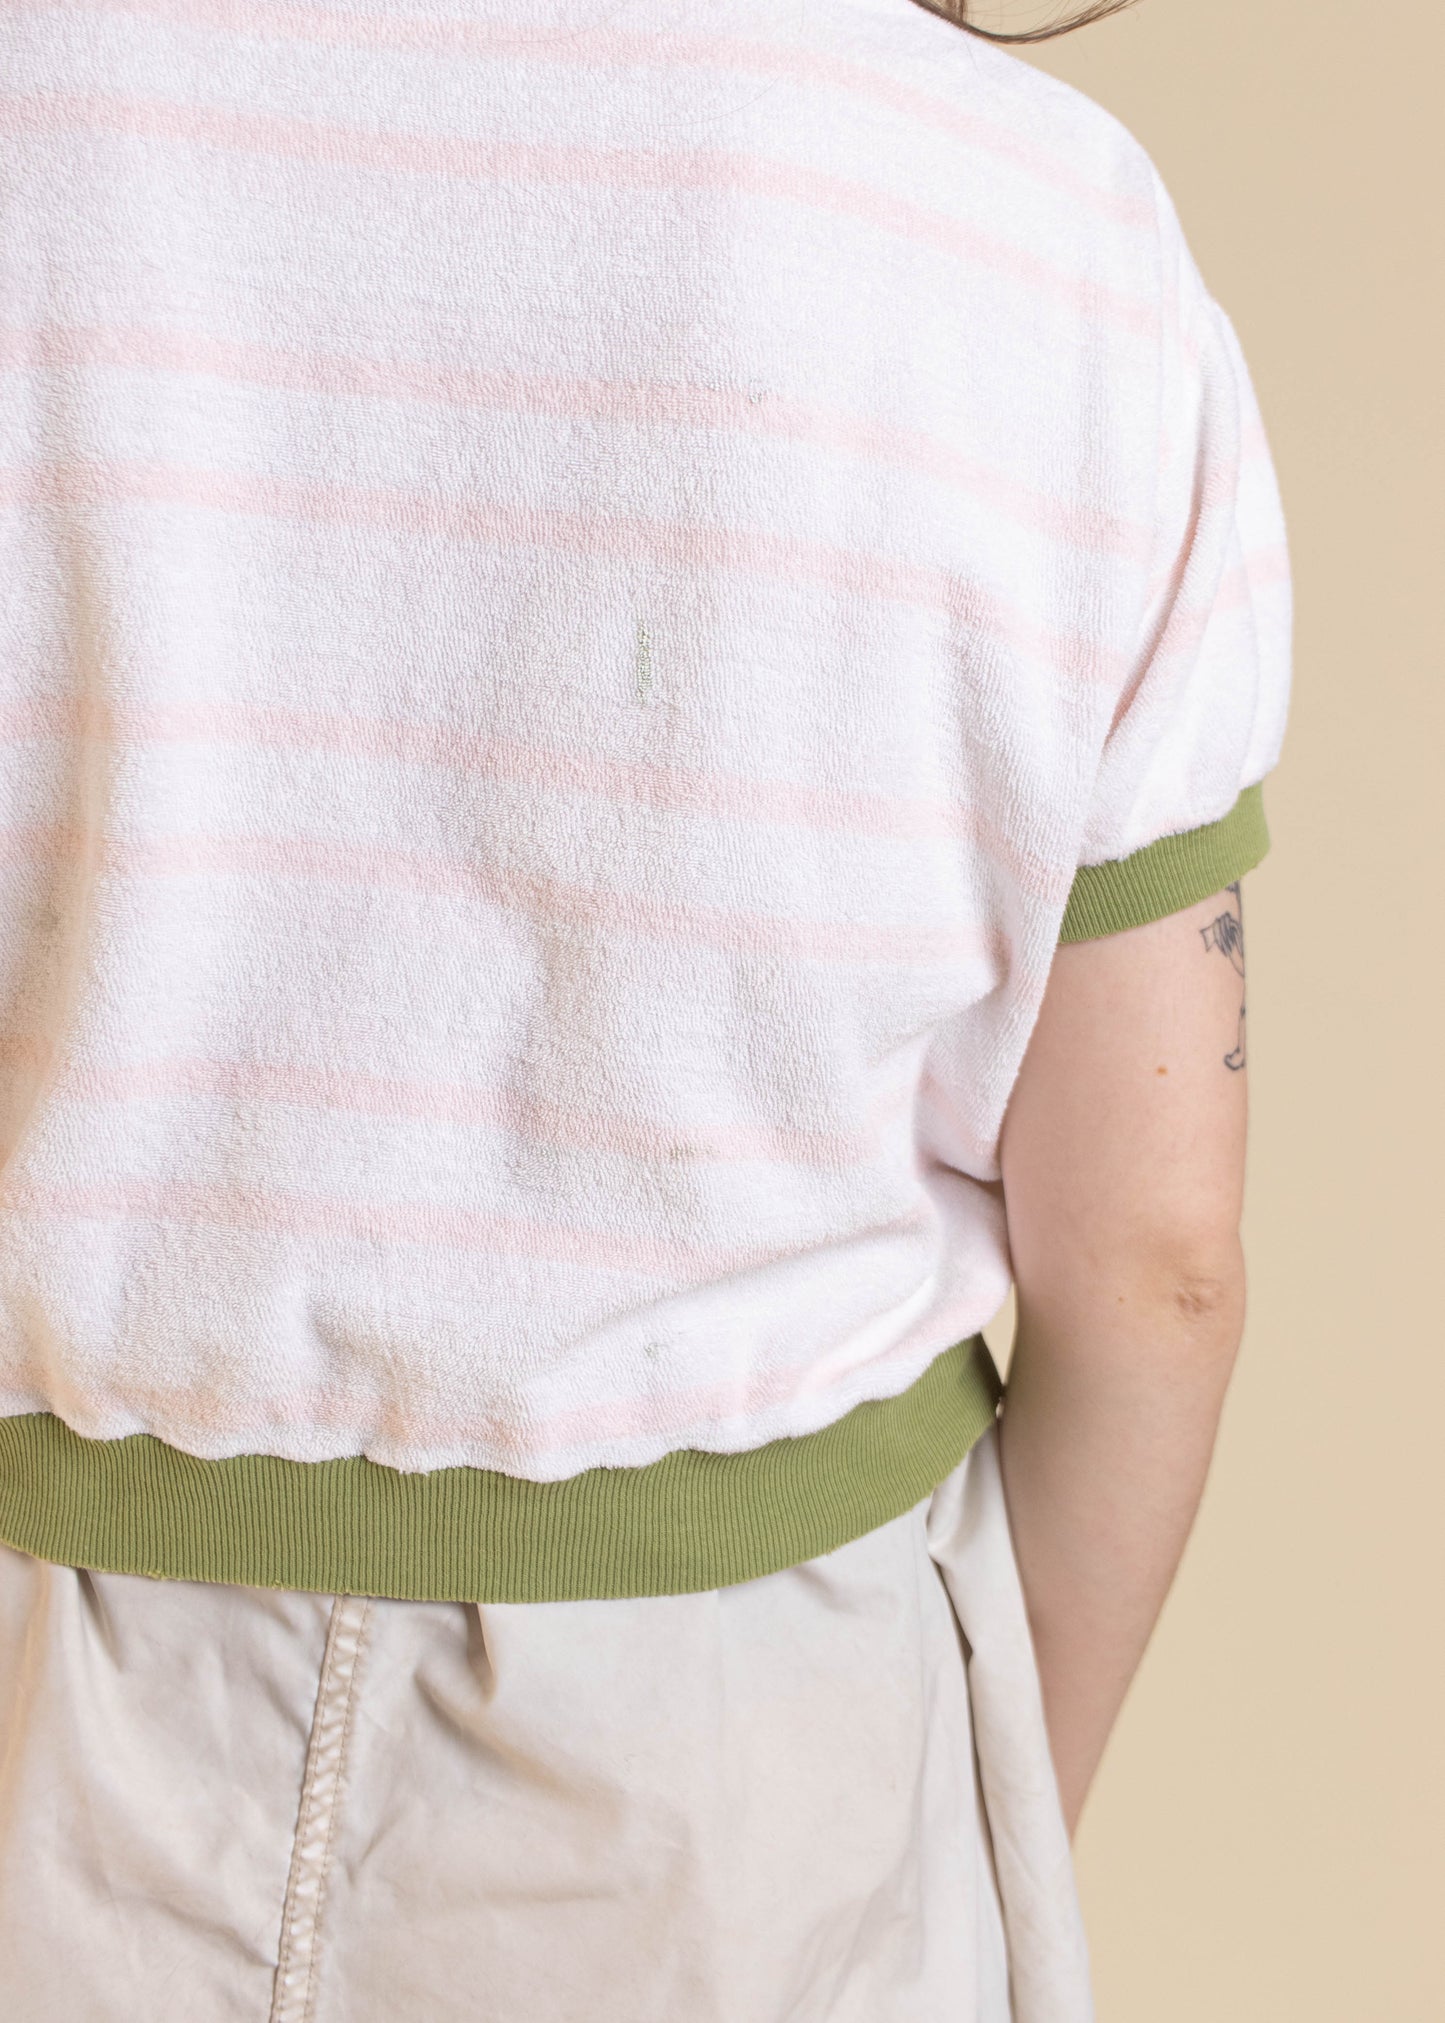 1970s Terry Cloth Stripe Pattern Short Sleeve Shirt Size S/M